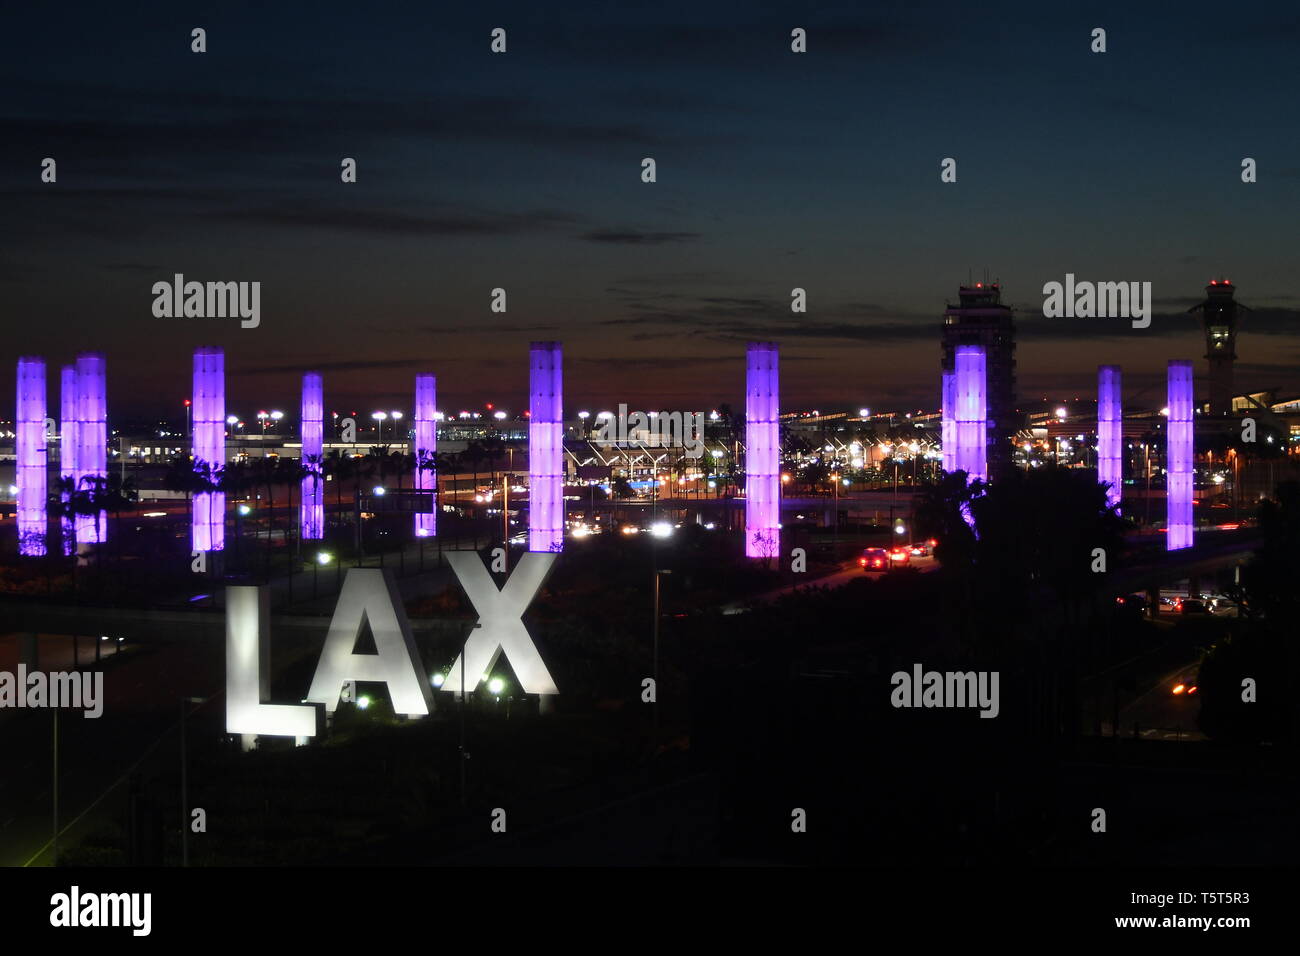 ENTRANCEWAY TO LAX - LOS ANGELES INTERNATIONAL AIRPORT. Stock Photo